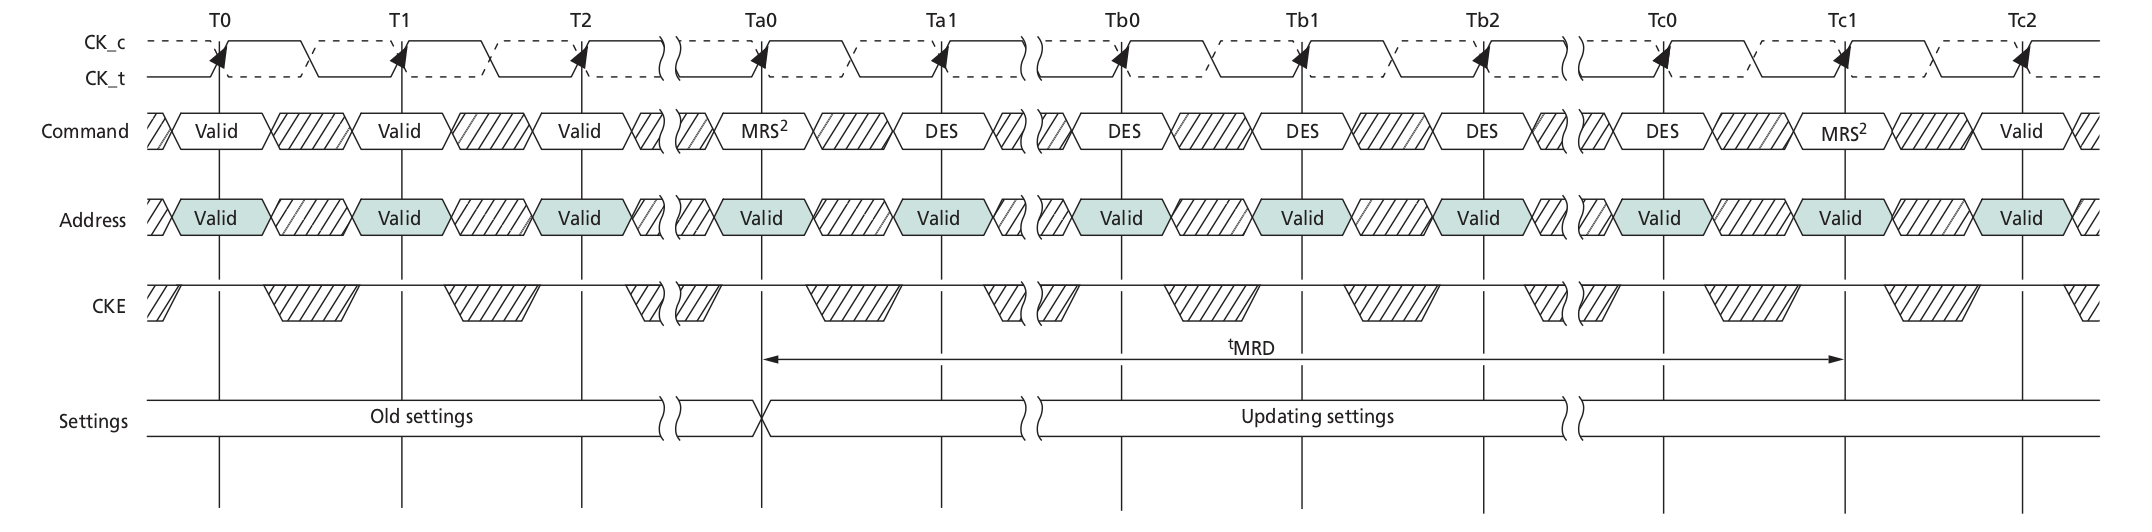 Figure 10: tMRD timing